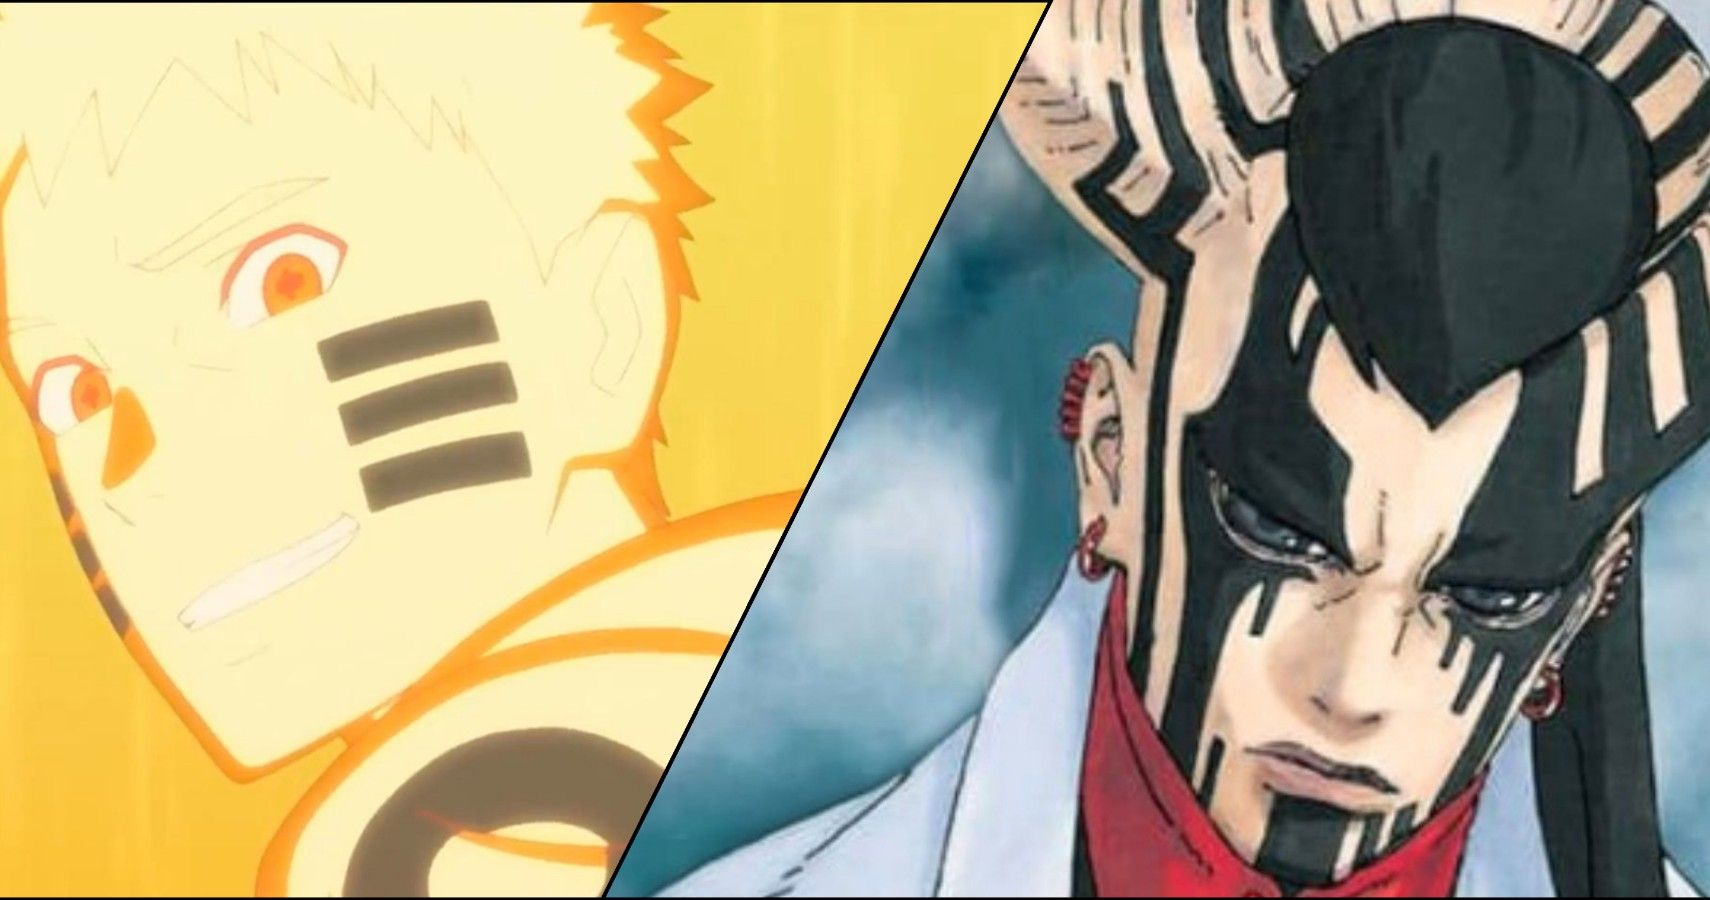 Who can beat Naruto?